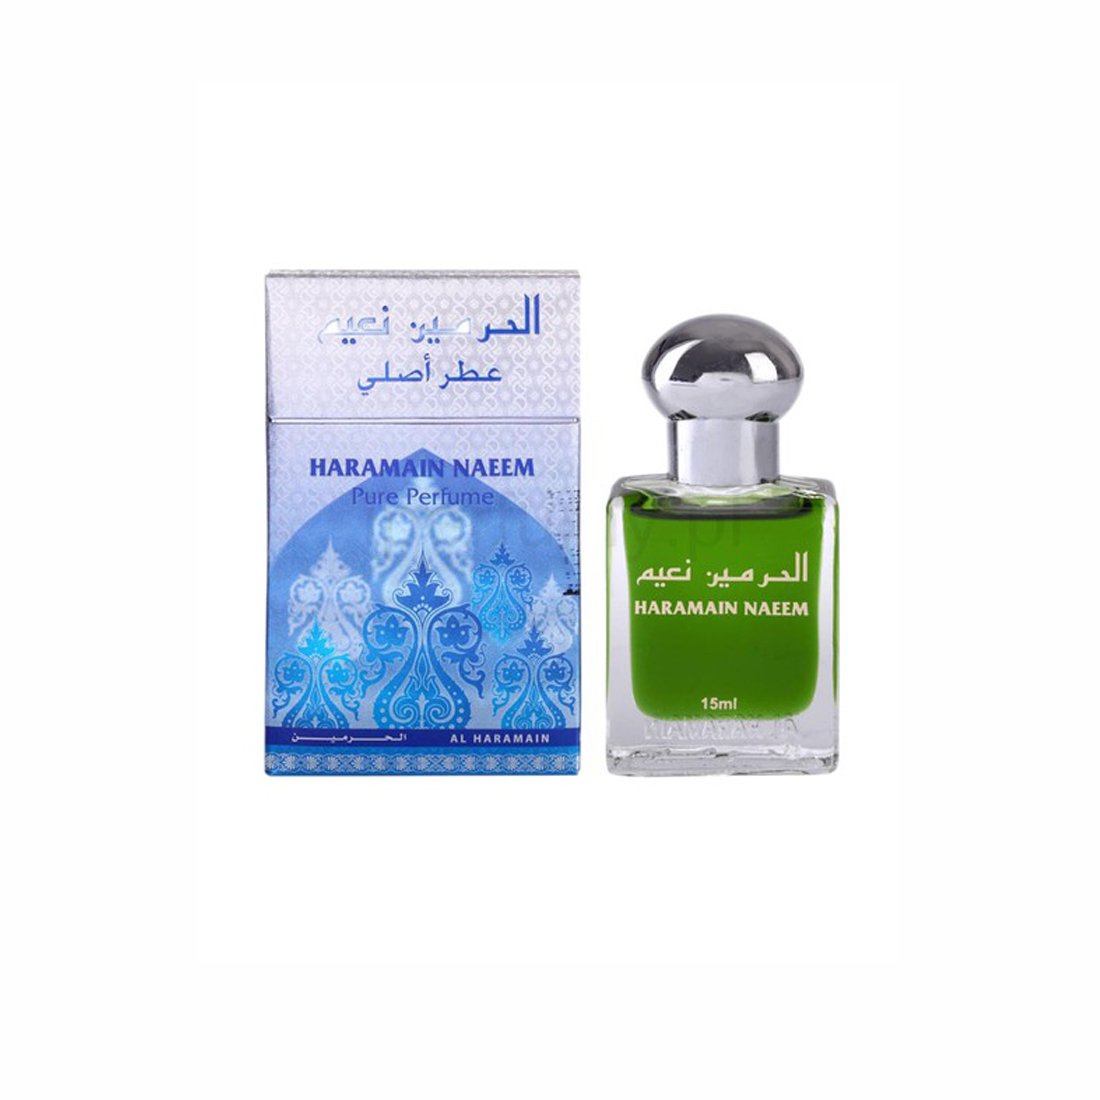 Al Haramain Naeem Fragrance Pure Original Roll on Perfume Oil (Attar) - 15 ml